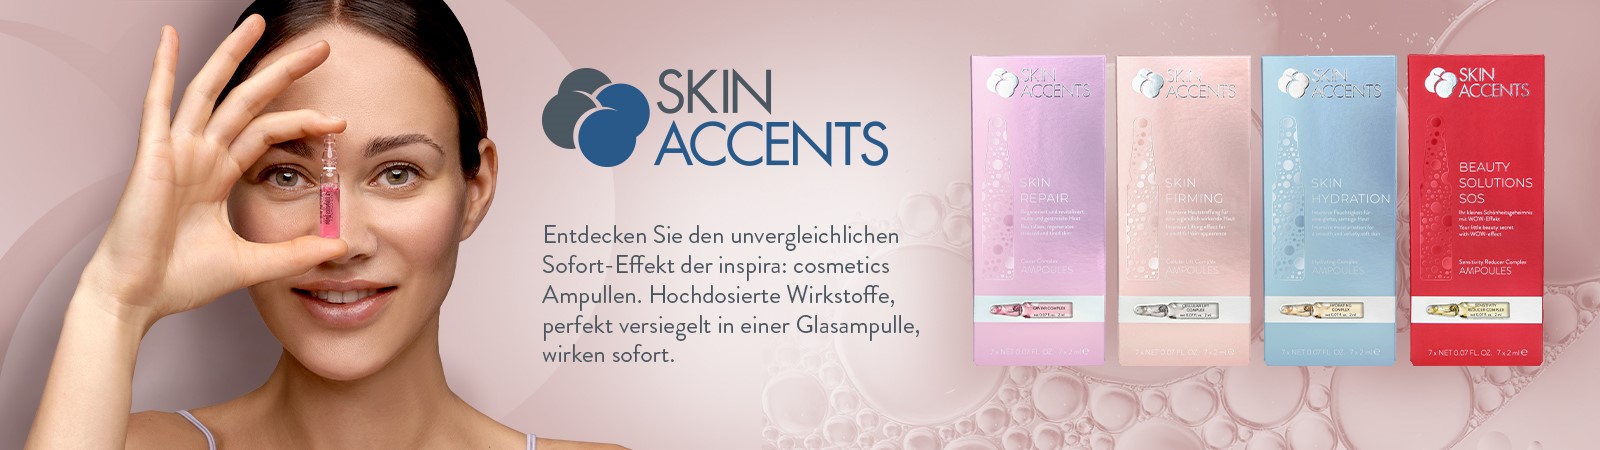 Skin Accents Ampullen